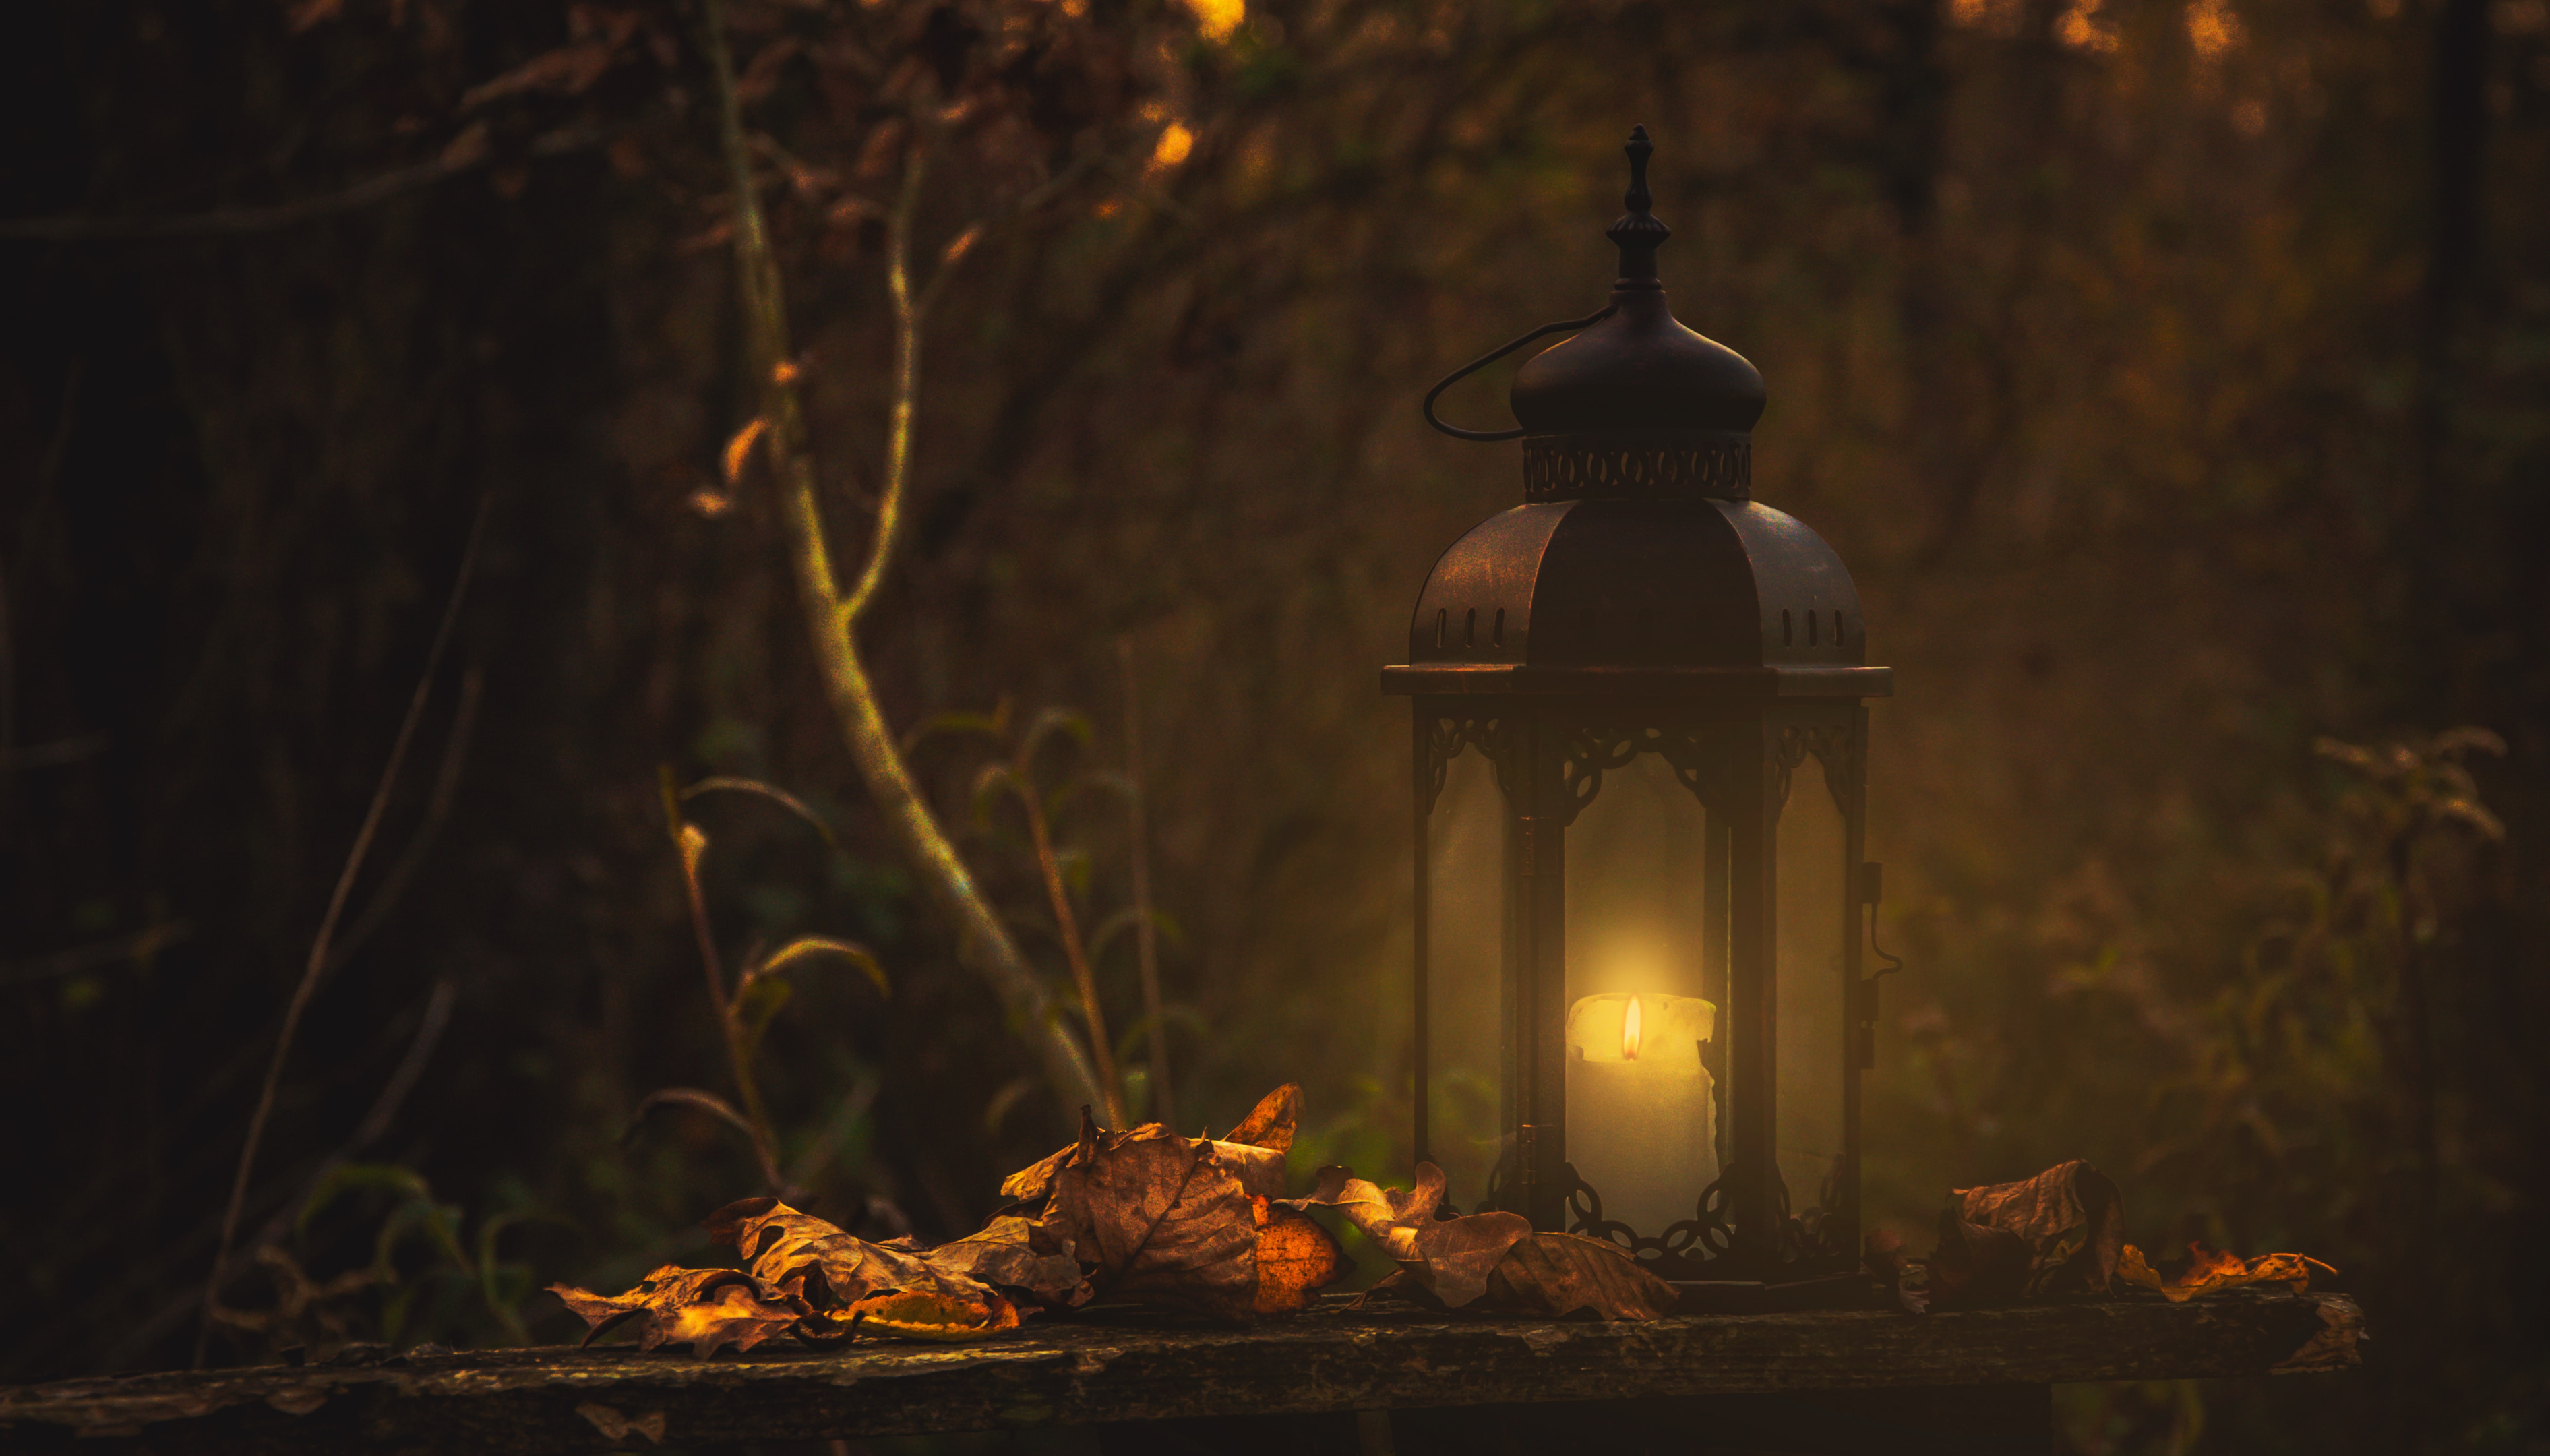 Lanterns ensure a cozy balcony atmosphere in autumn